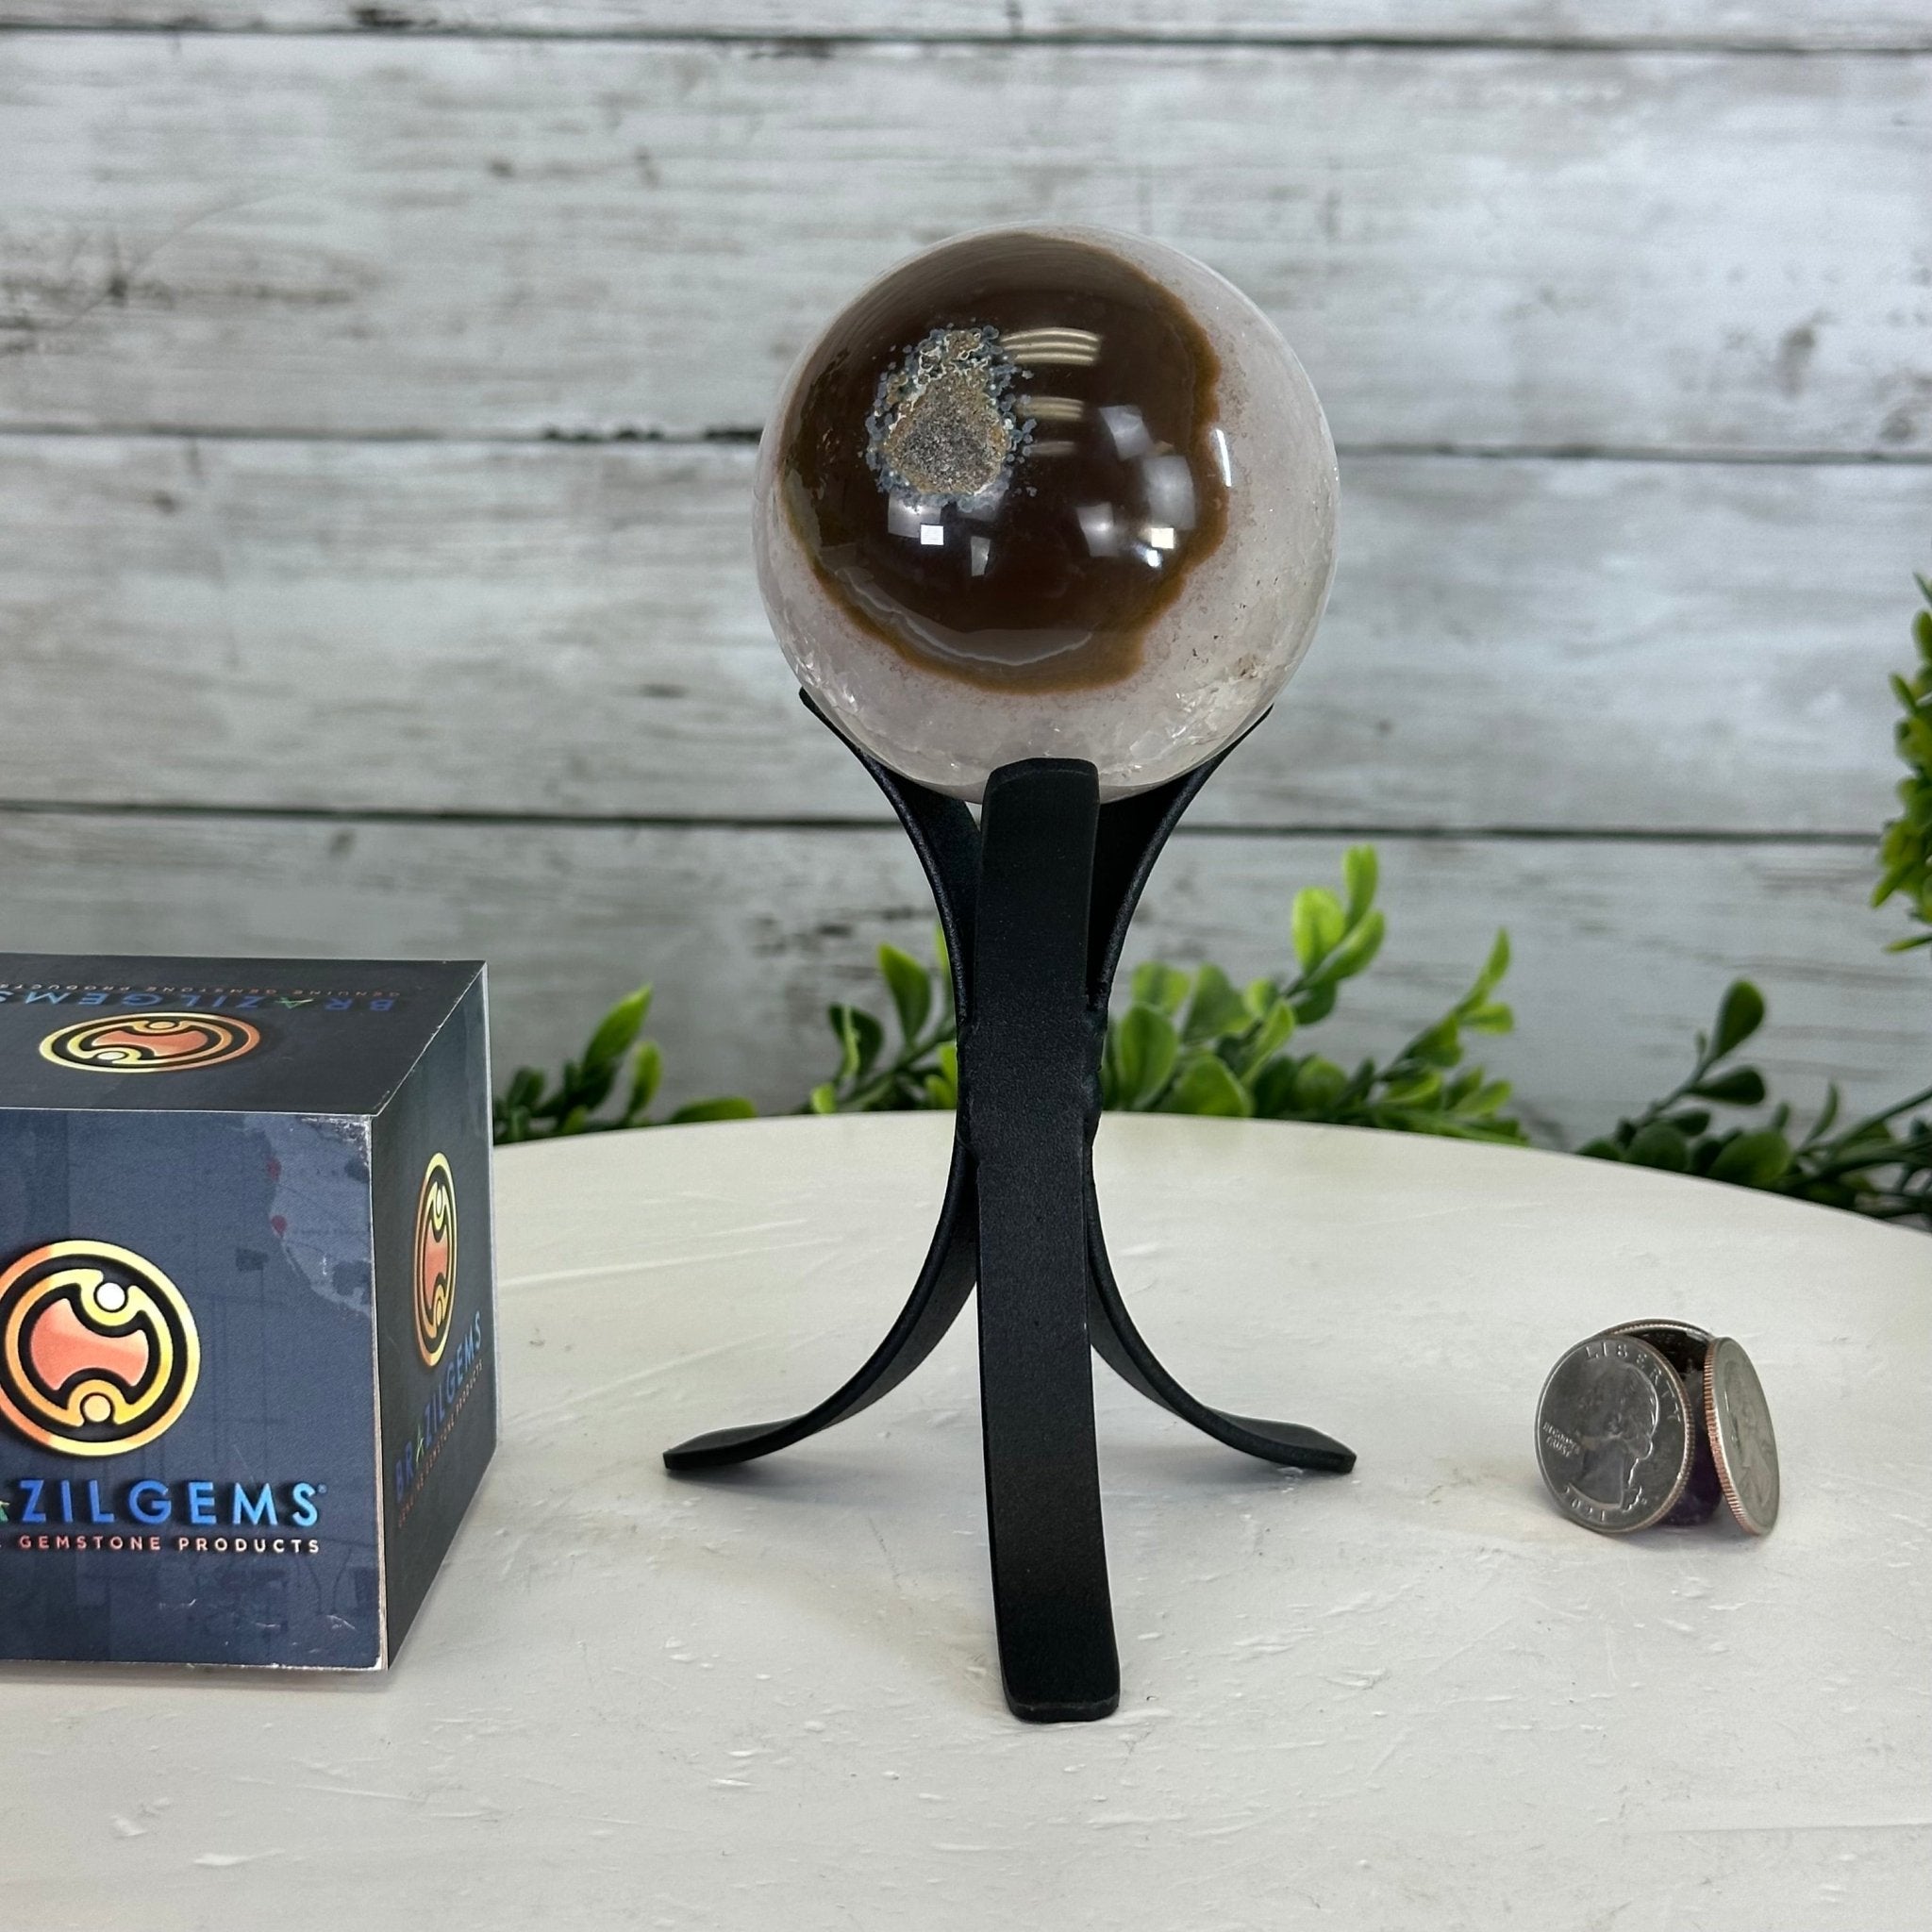 Druzy Amethyst Sphere on a Metal Stand, 0.7 lbs & 6.1" Tall #5630-0031 - Brazil GemsBrazil GemsDruzy Amethyst Sphere on a Metal Stand, 0.7 lbs & 6.1" Tall #5630-0031Spheres5630-0031